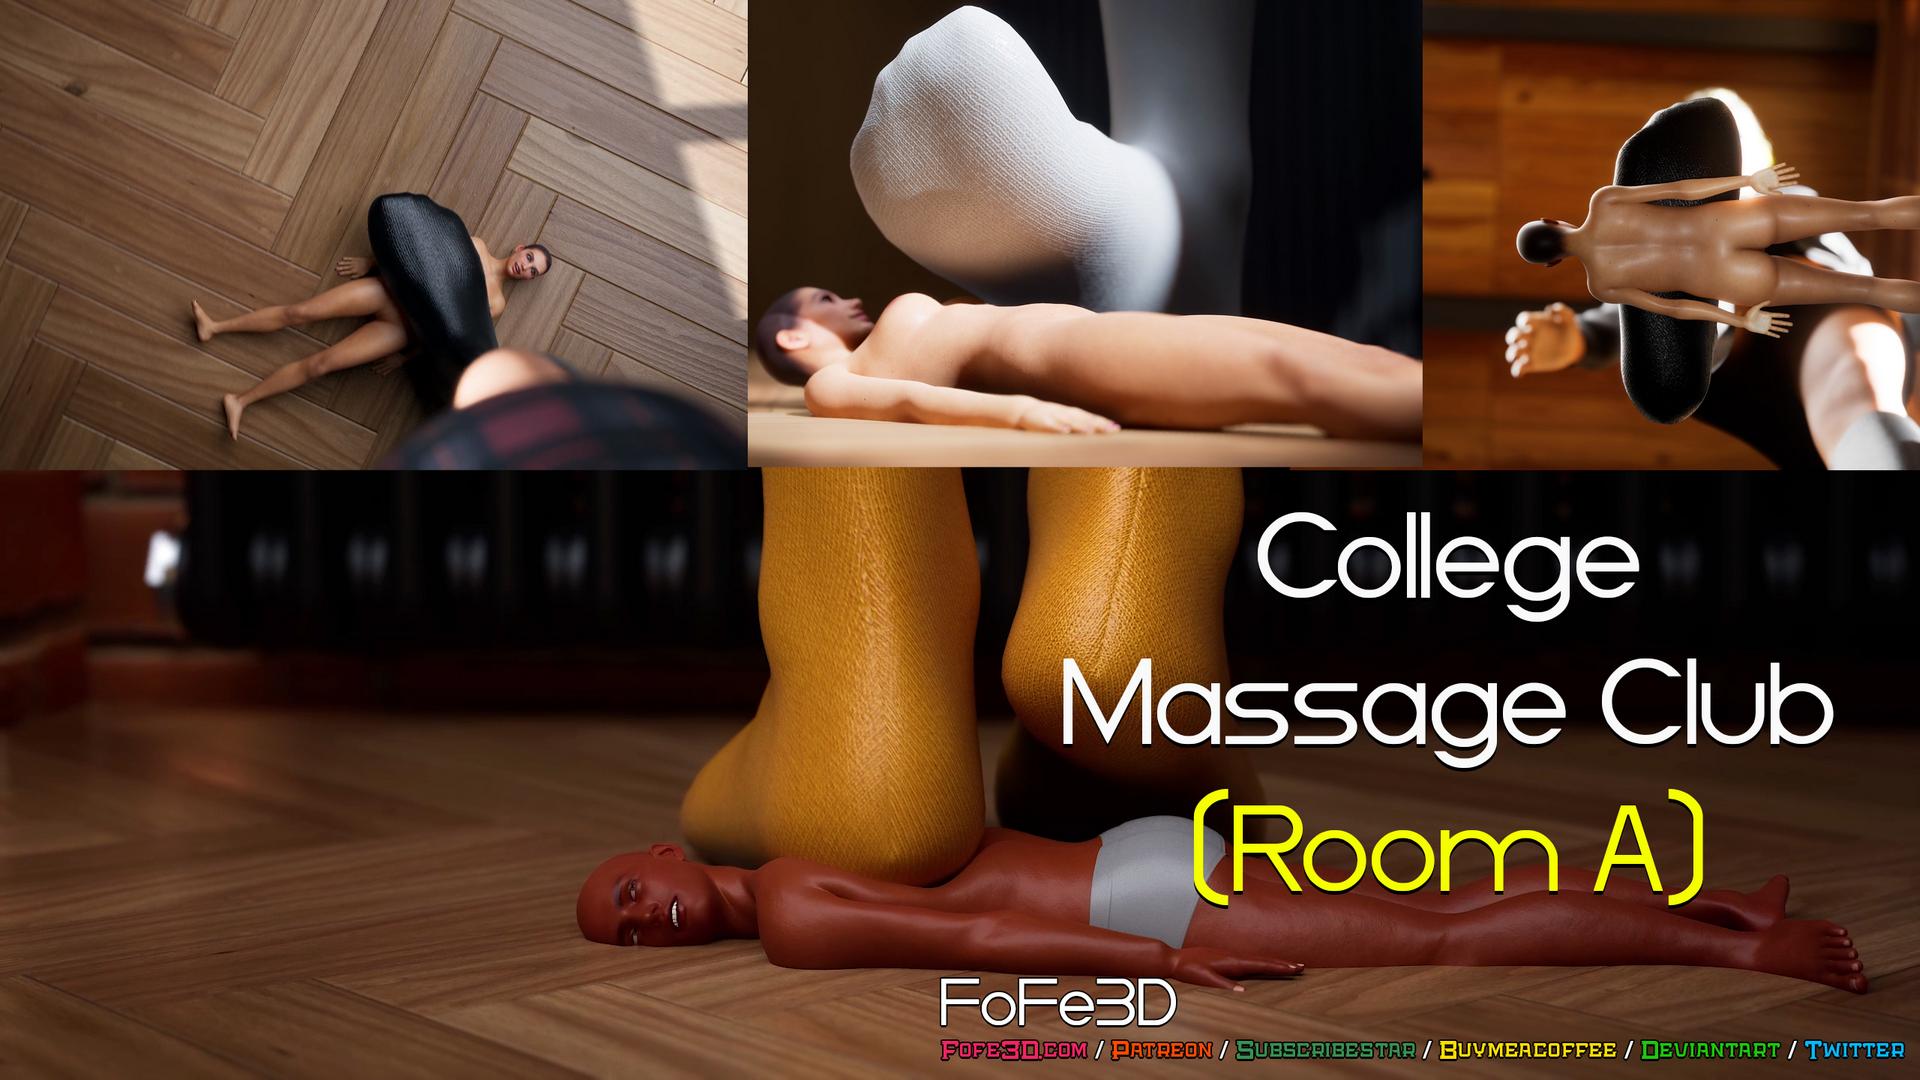 College Massage Club Room A [Animation]